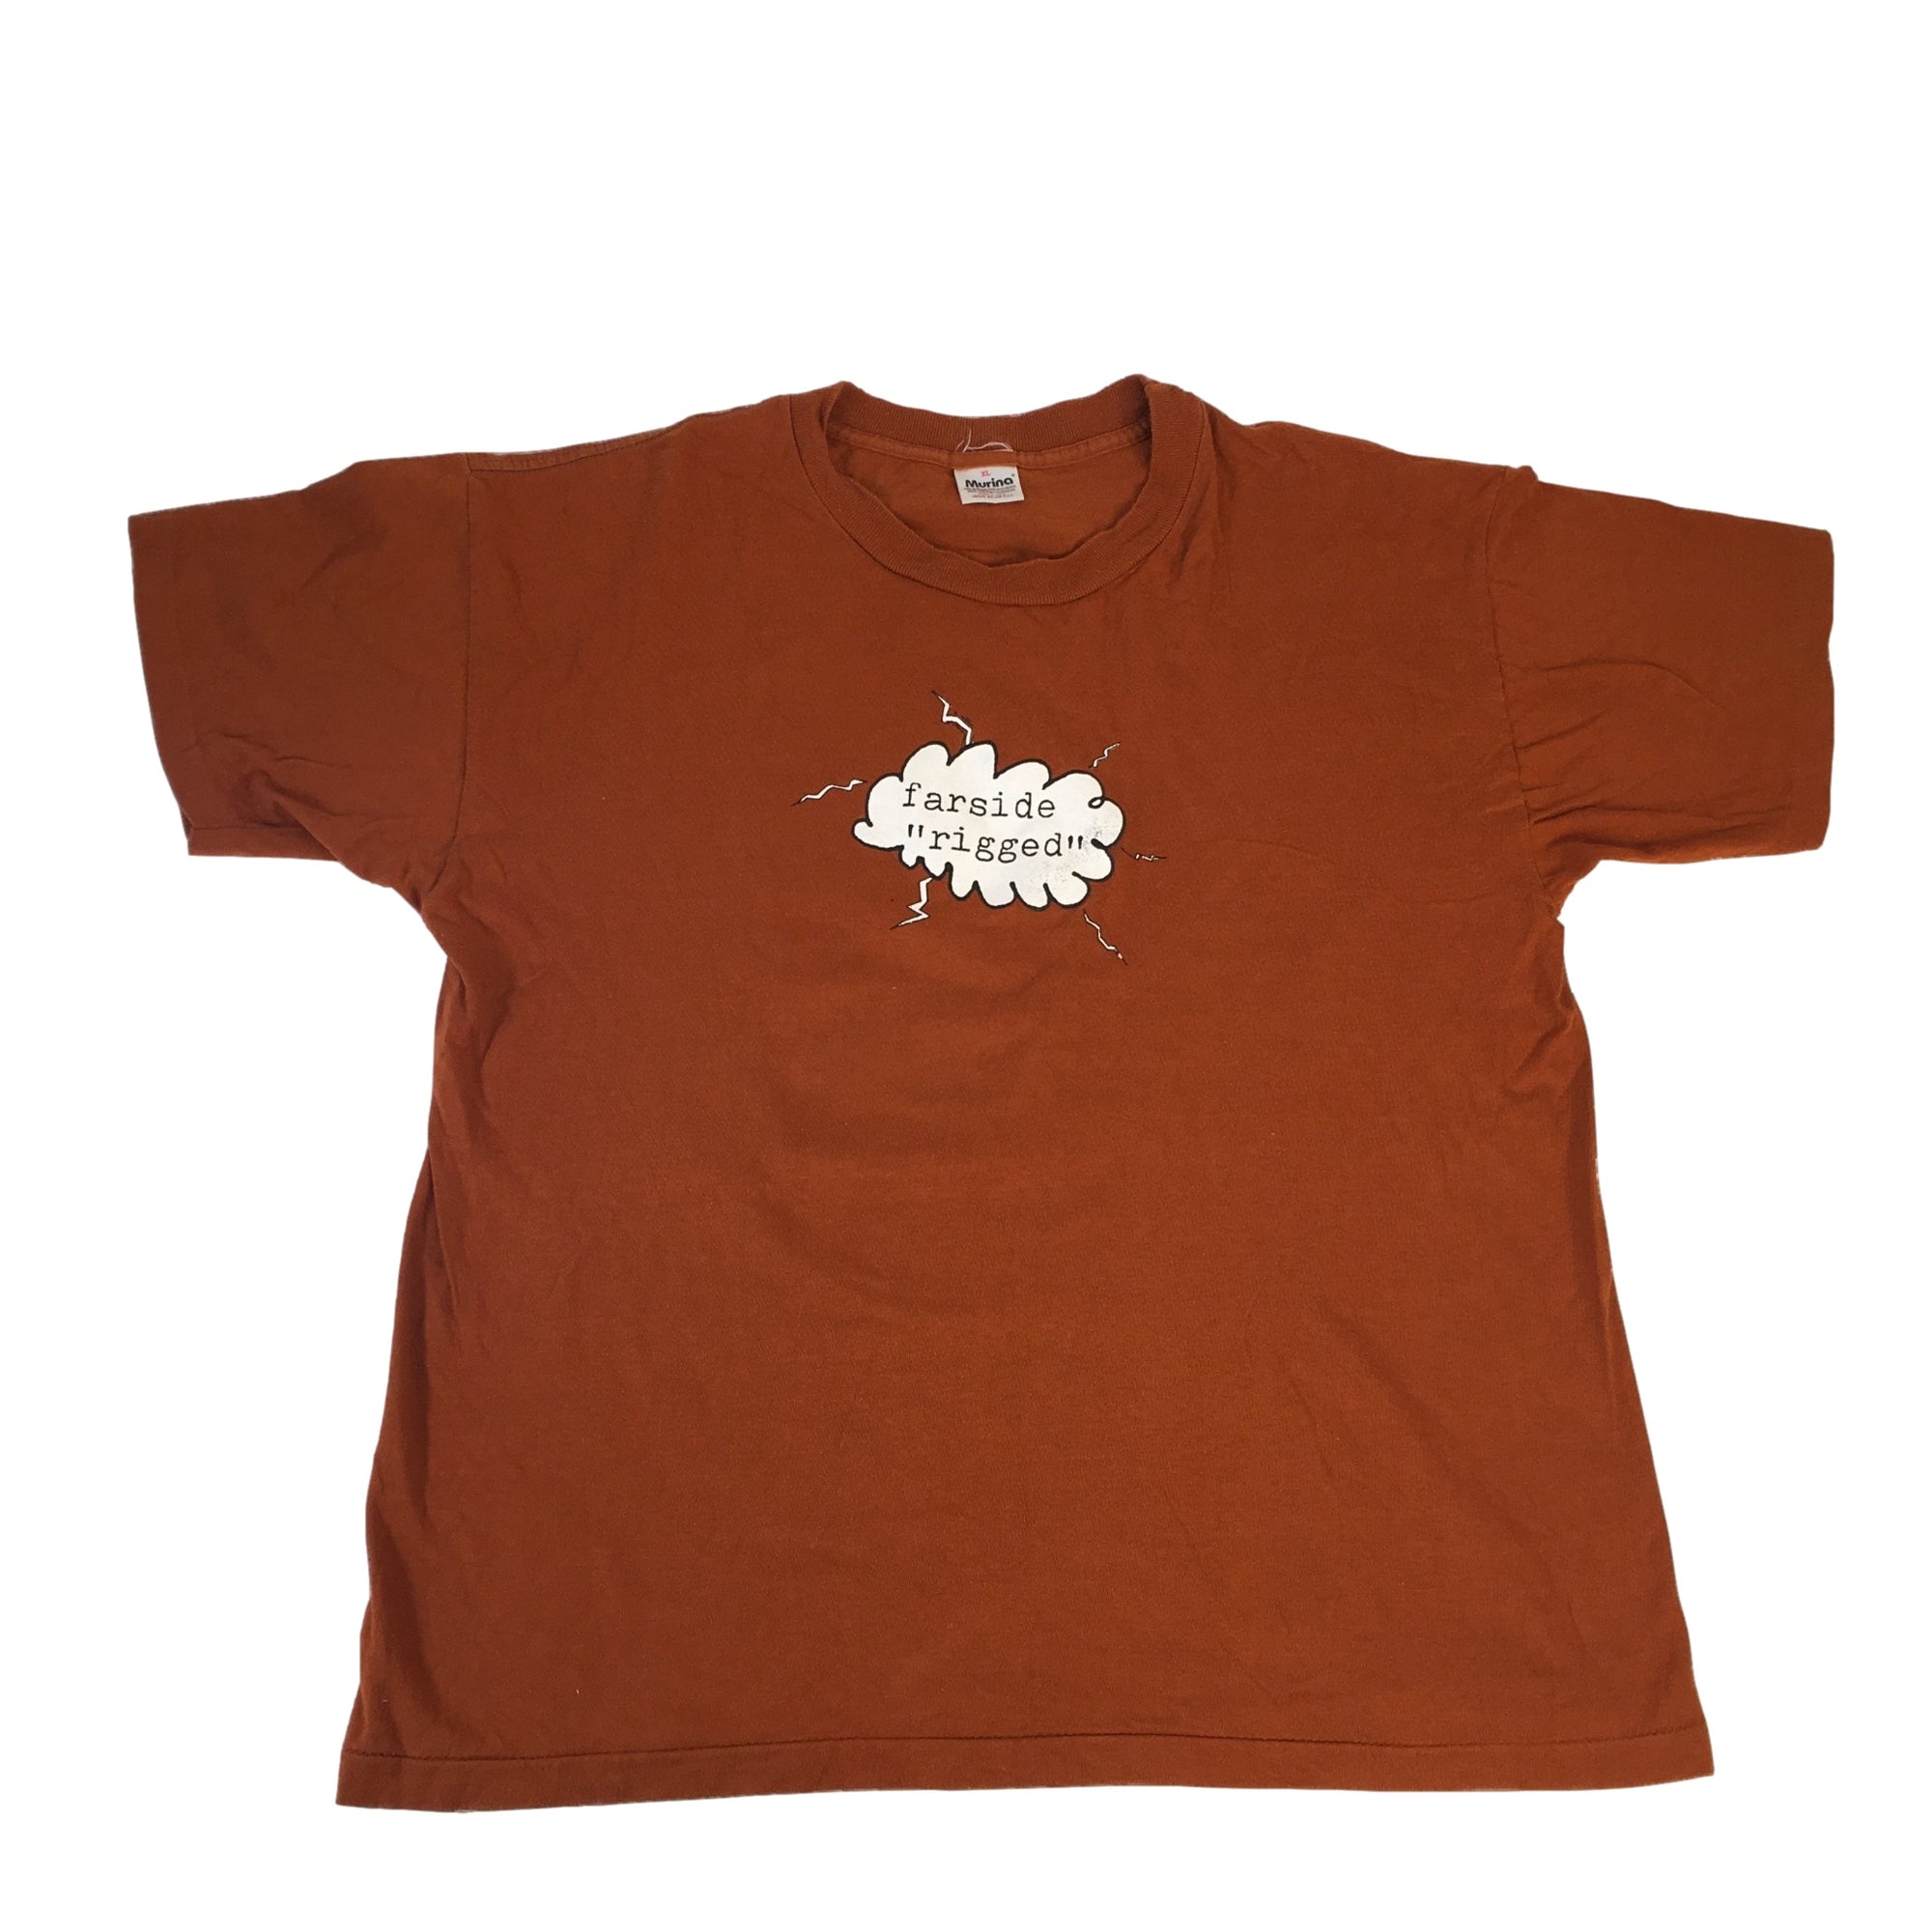 Vintage Farside "Rigged" T-Shirt - jointcustodydc